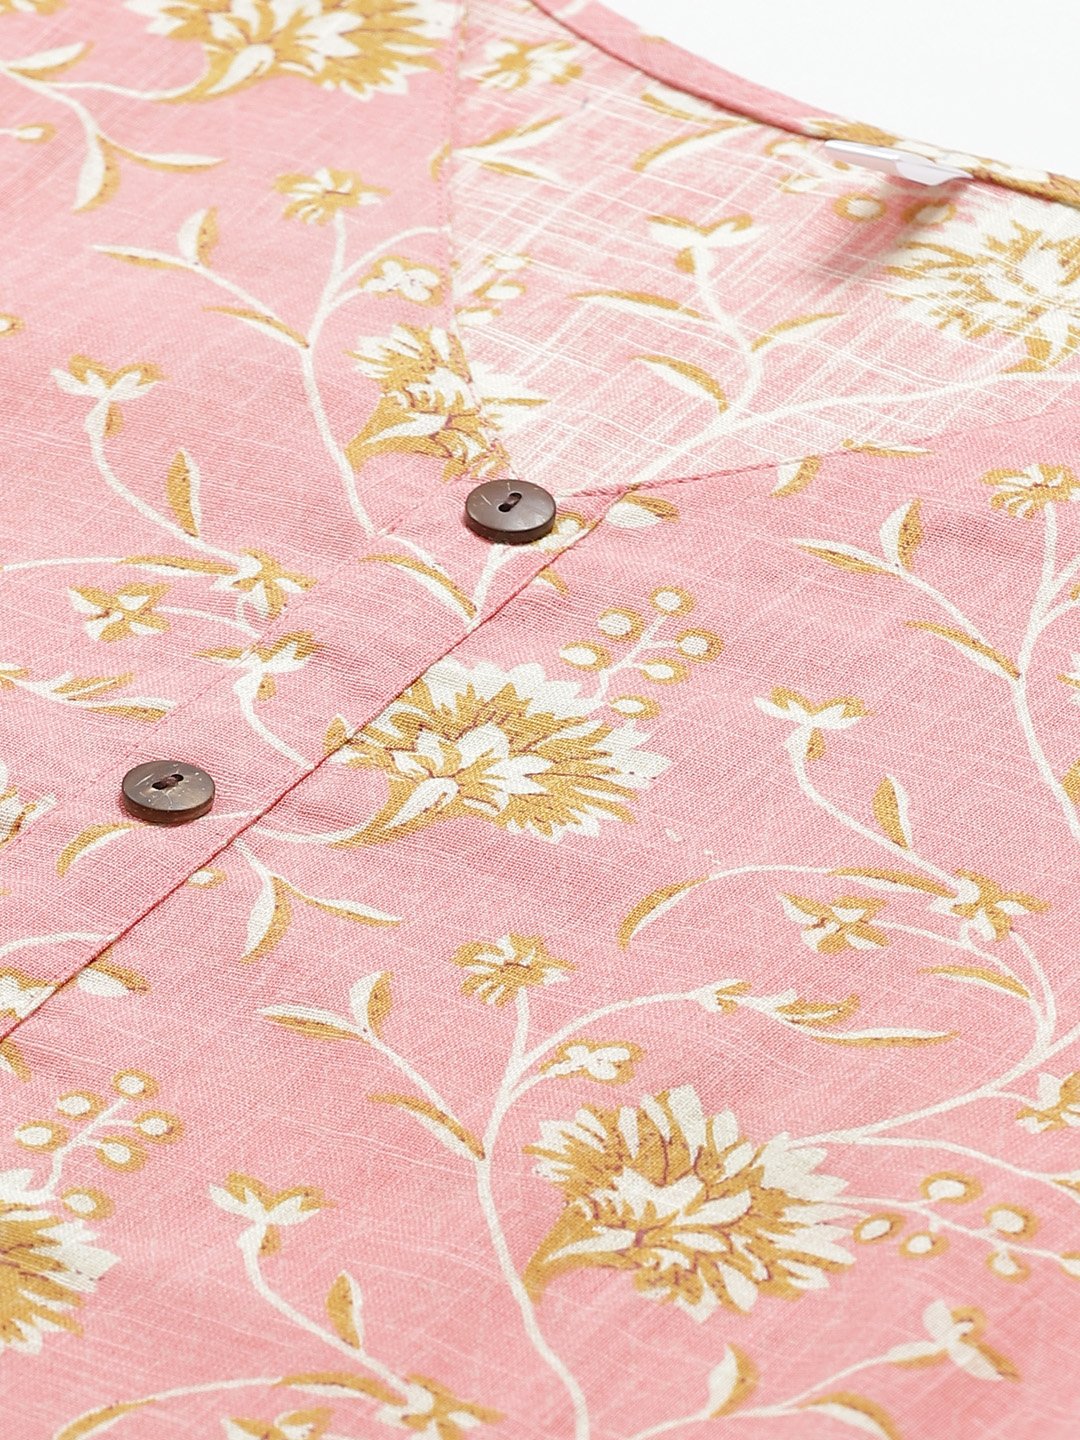 Women's Pink & Mustard Regular Floral Printed V-Neck Top - Nayo Clothing